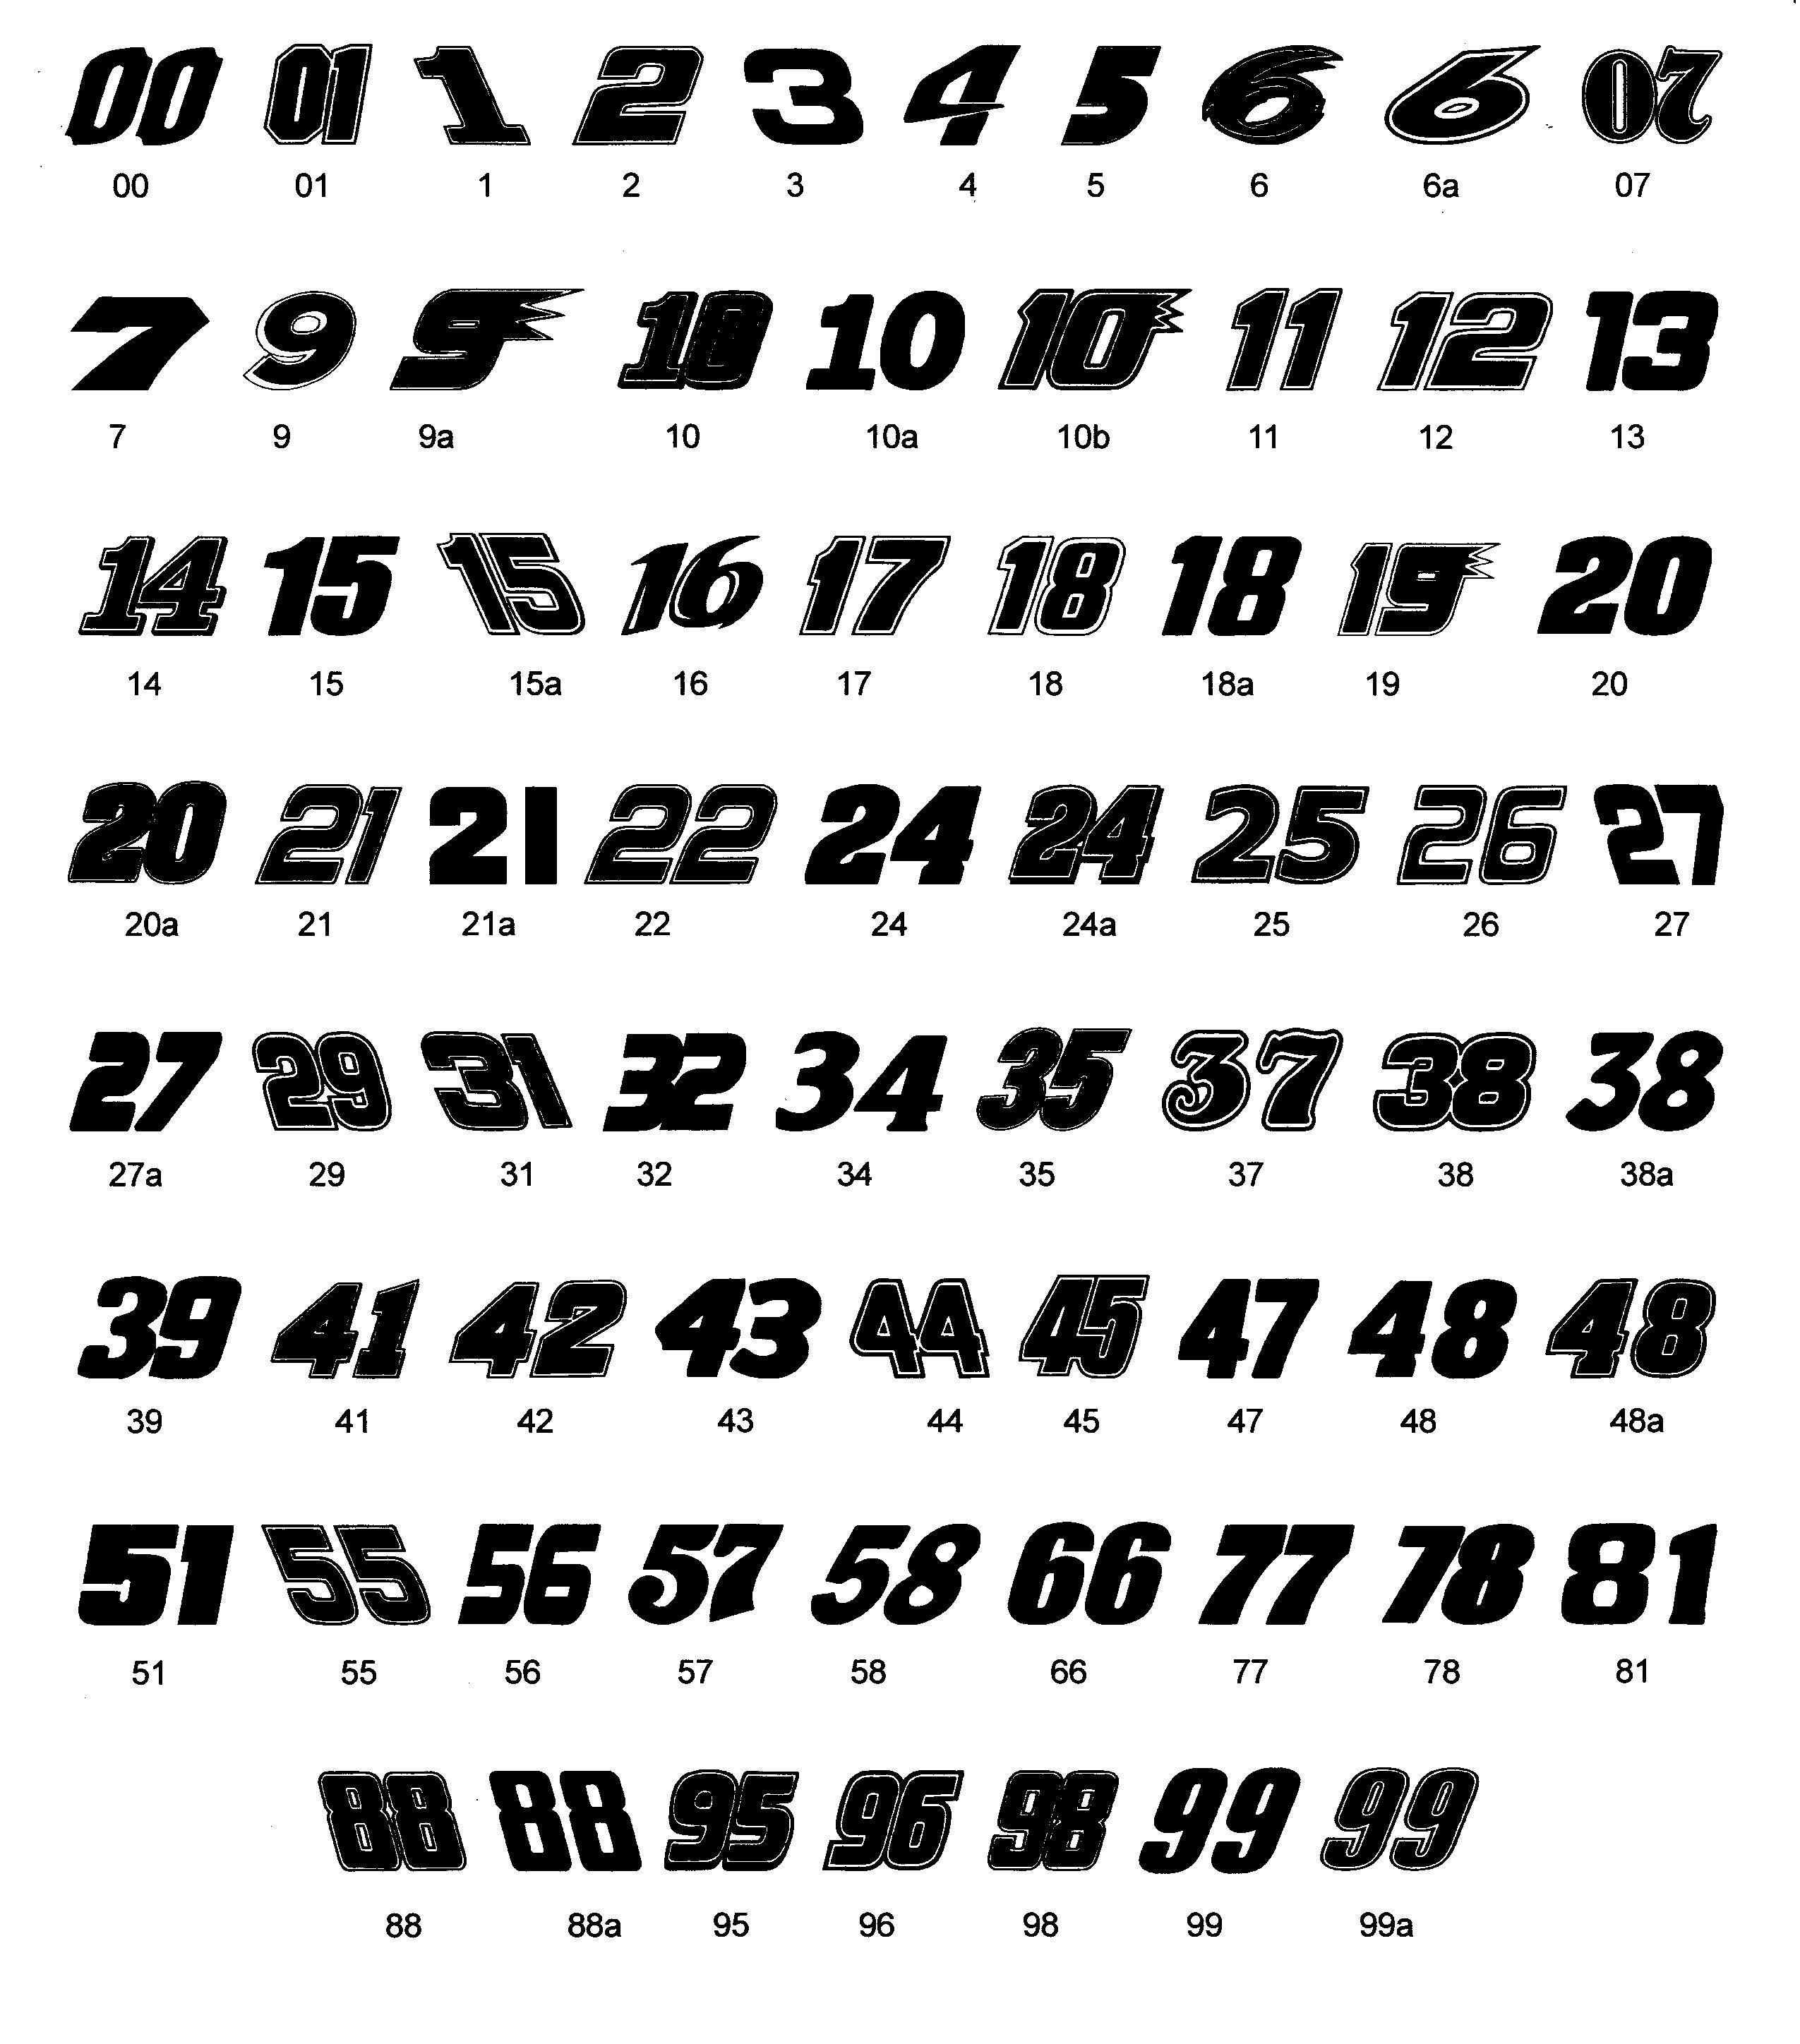 NASCAR Number Logo - Nascar Fonts Group with 52+ items